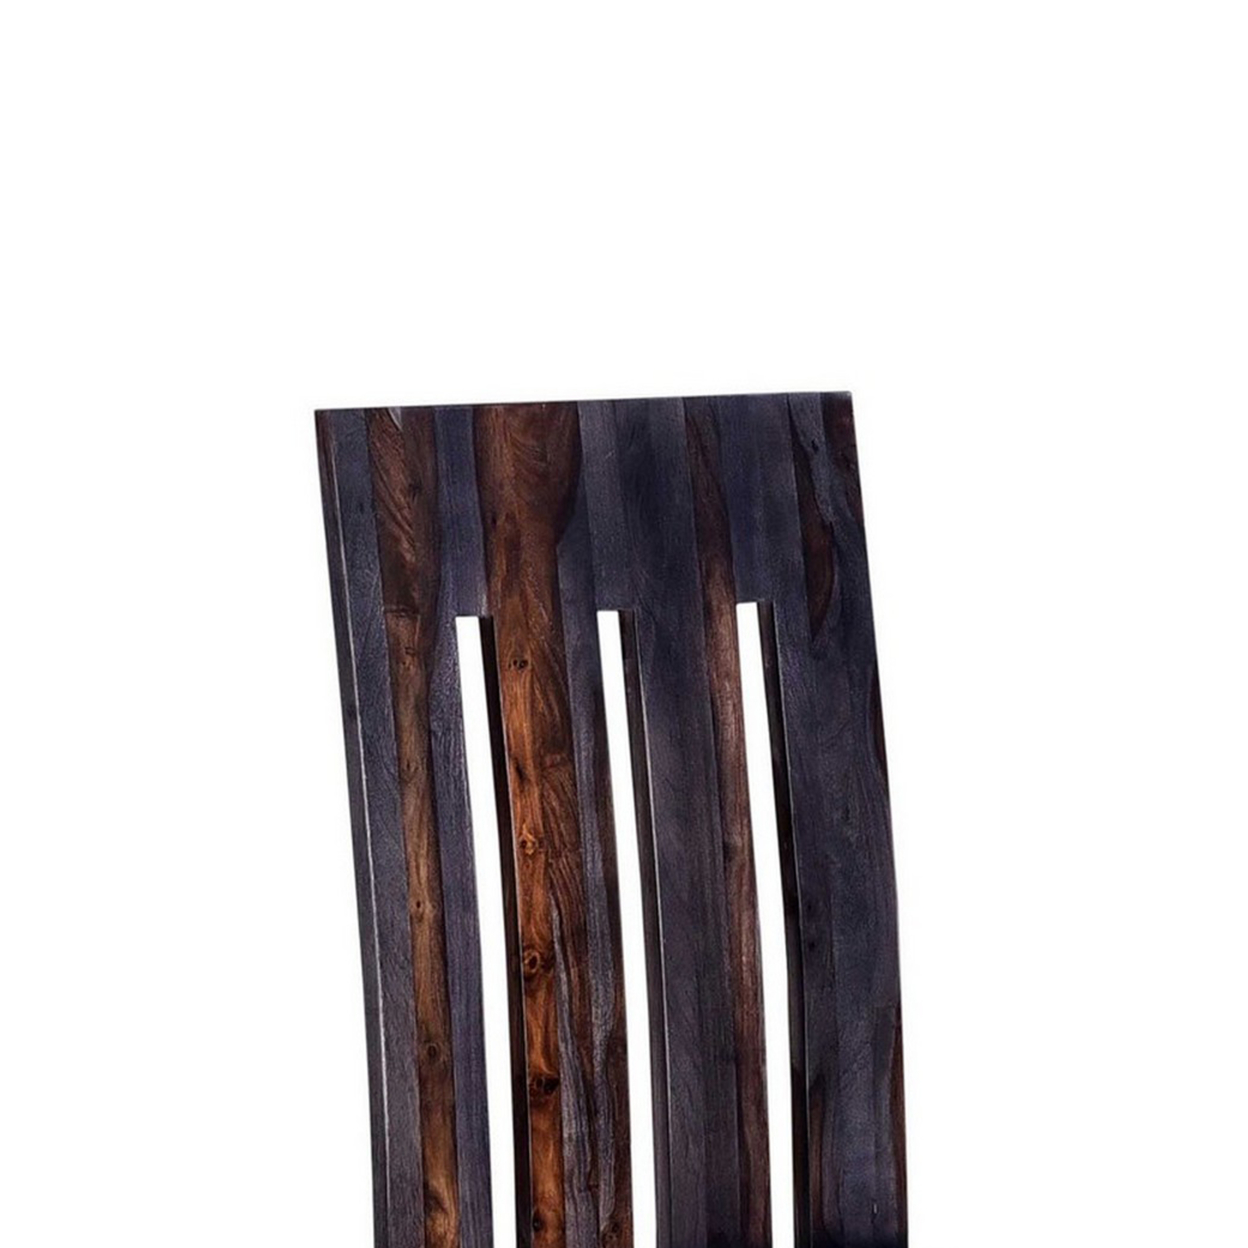 Sari 18 Inch Dining Chairs, Dark Acacia Wood, Set Of 2, Natural Brown, Gray- Saltoro Sherpi